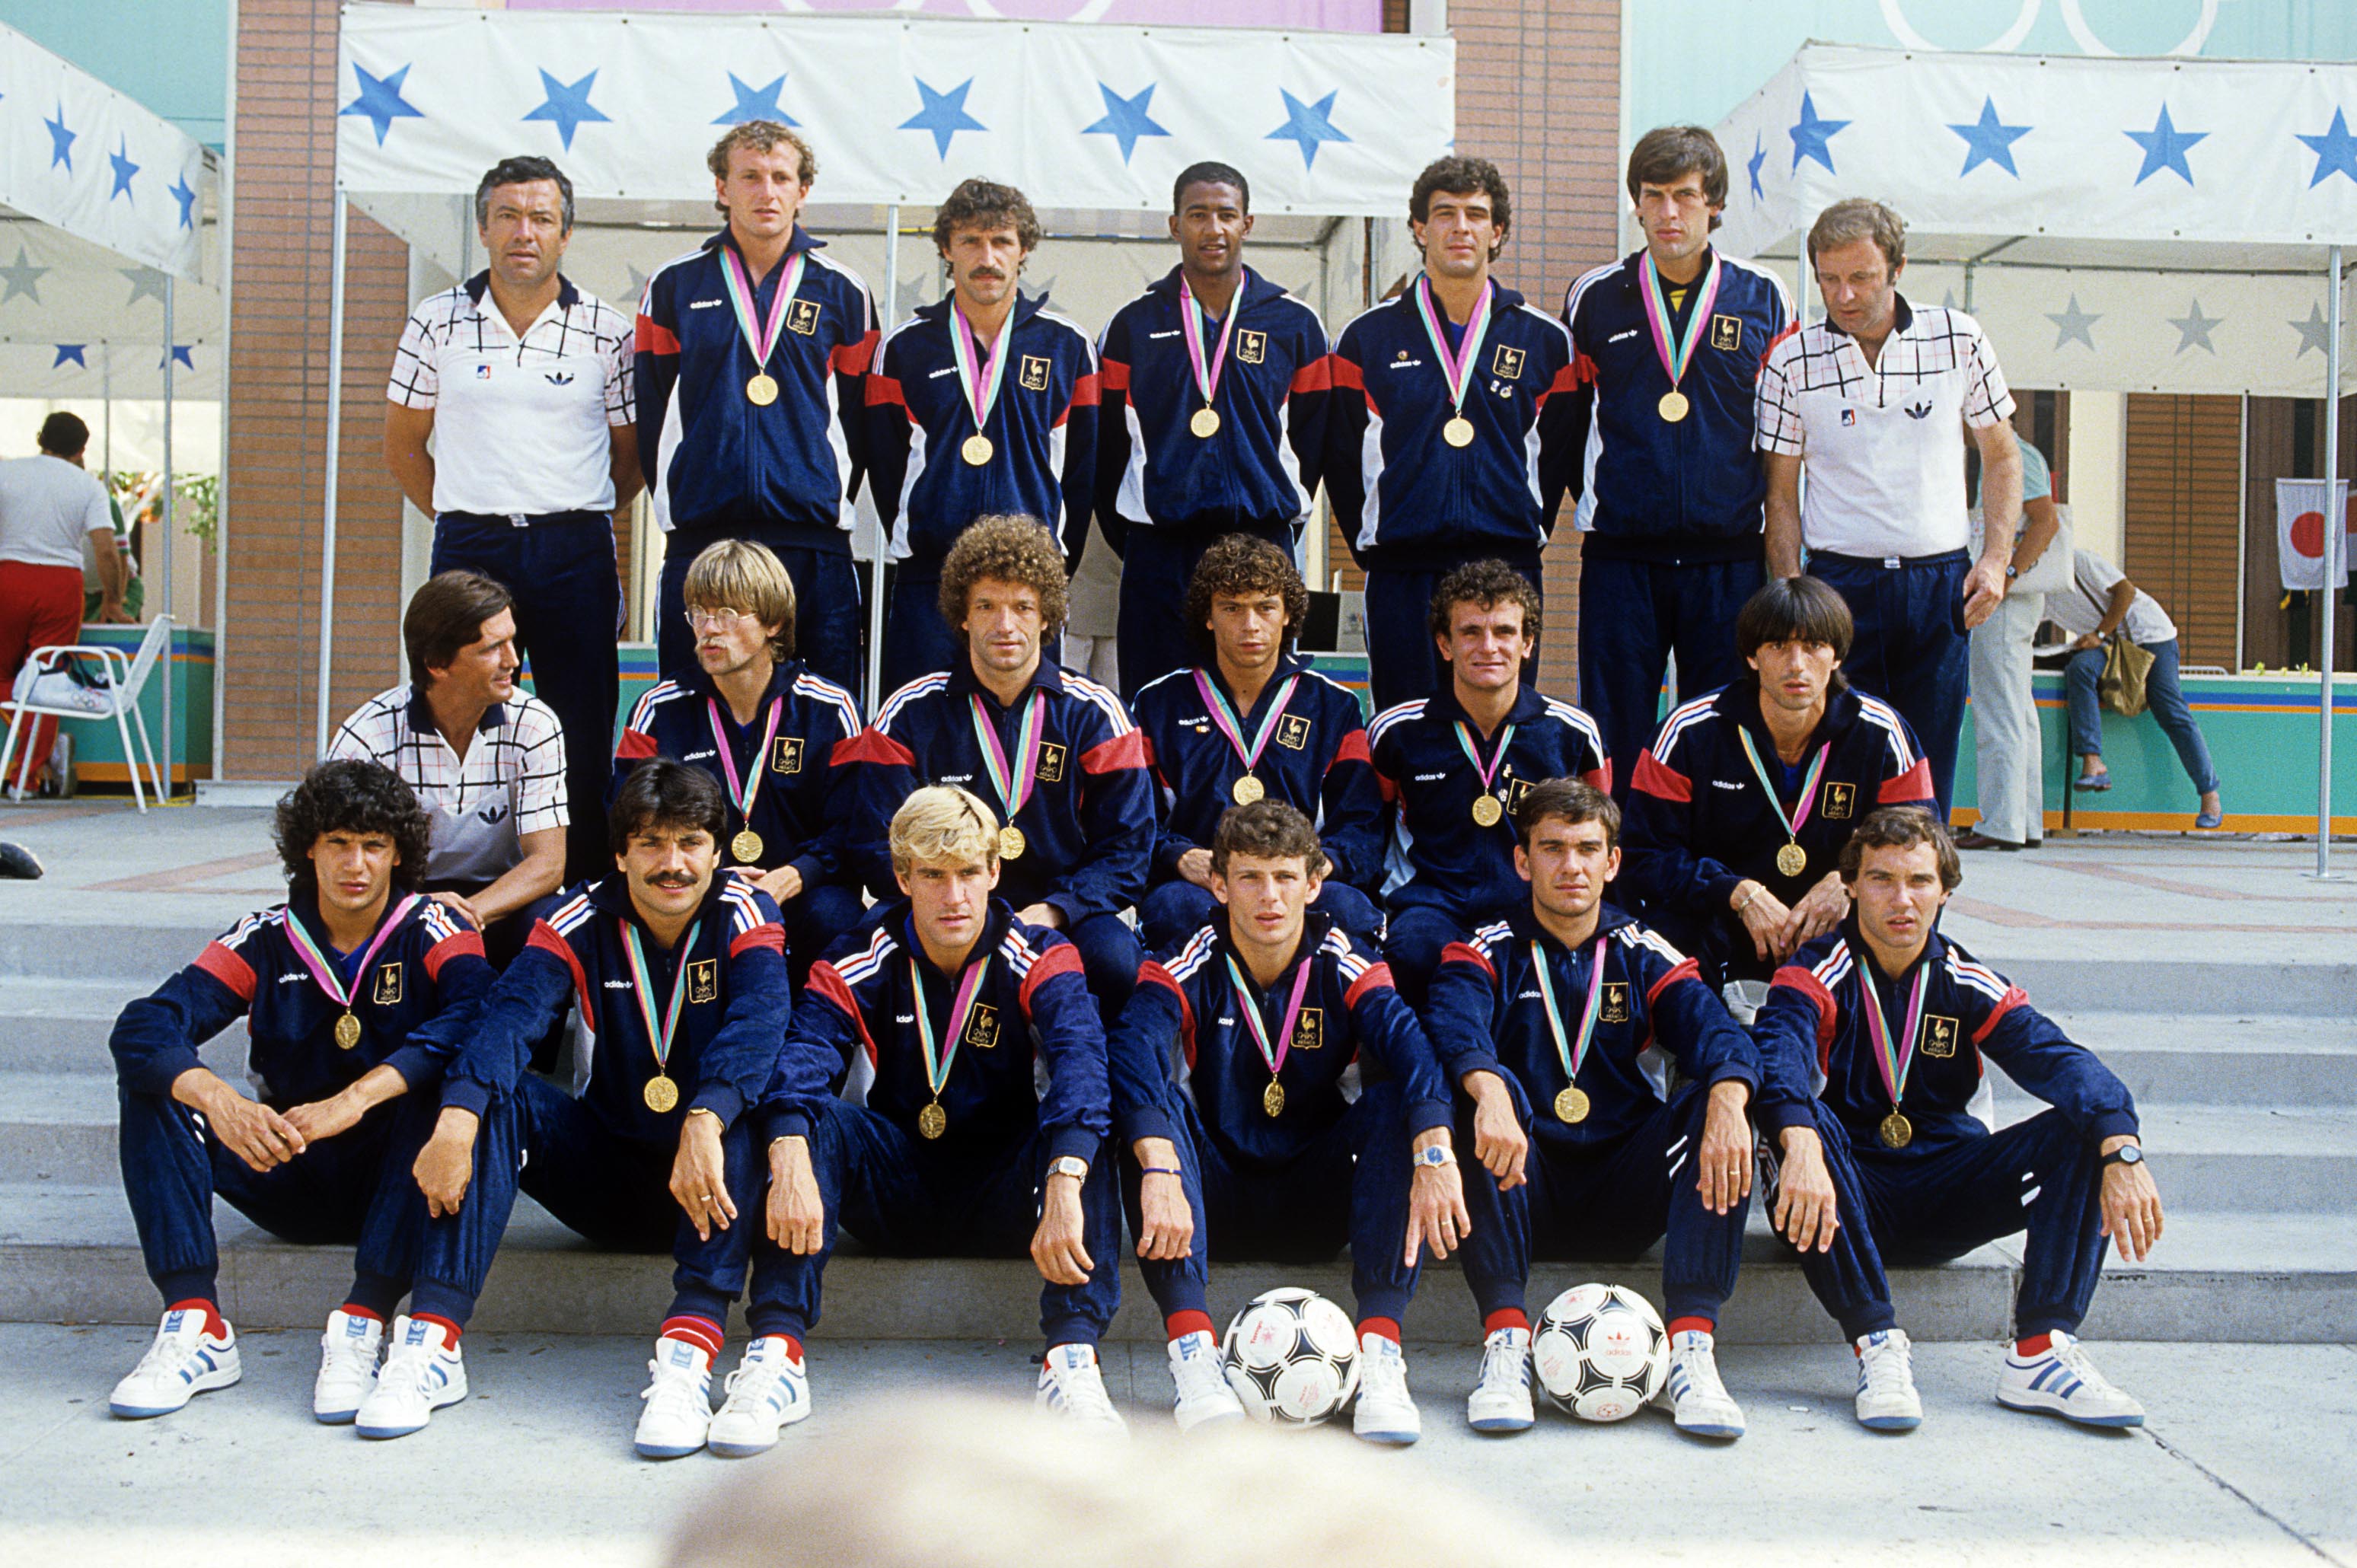 Equipe de France Olympique football Los Angeles 1984